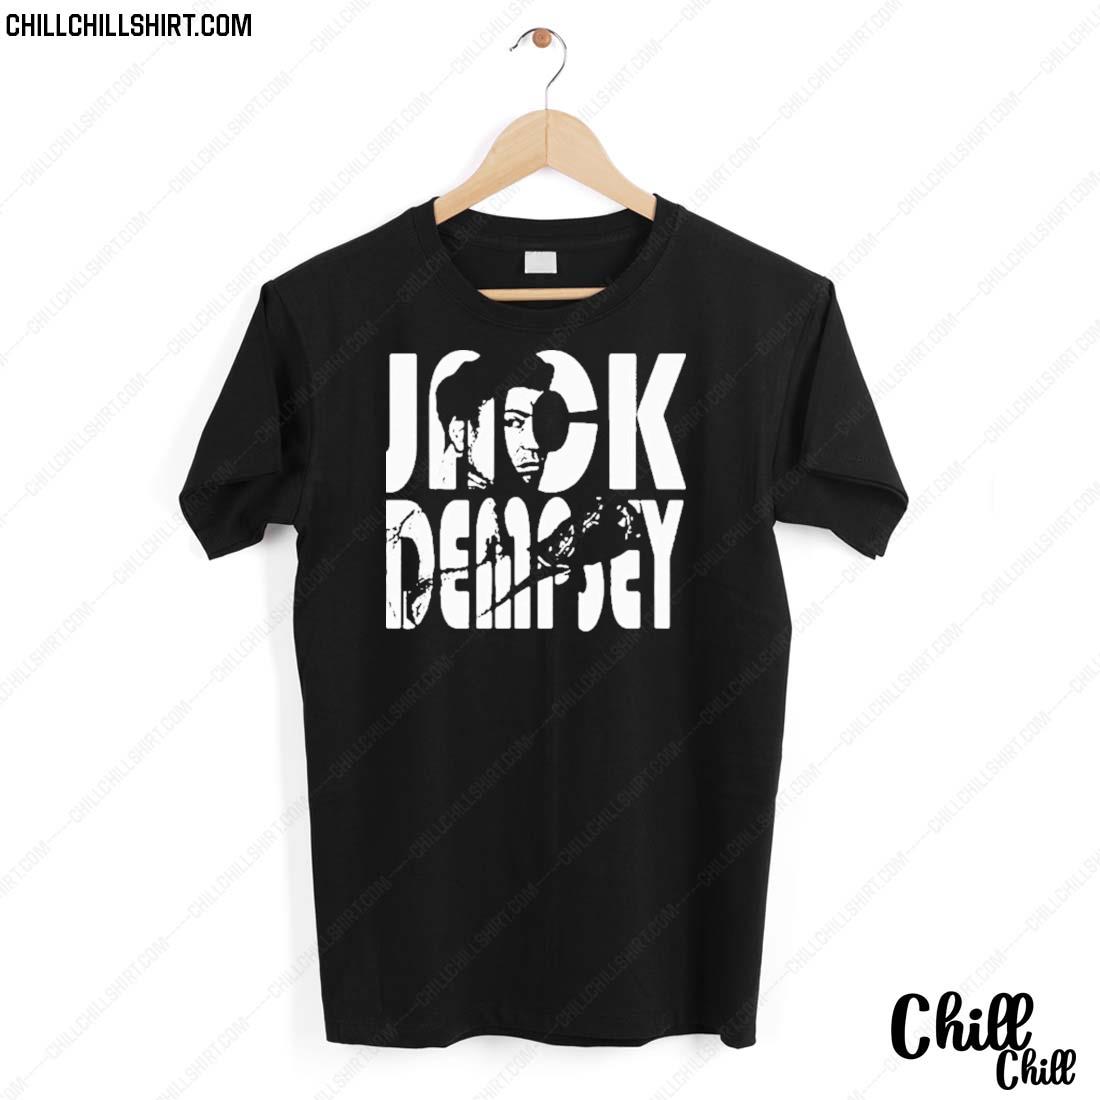 Nice white Design Jack Dempsey Professional Boxing Shirt